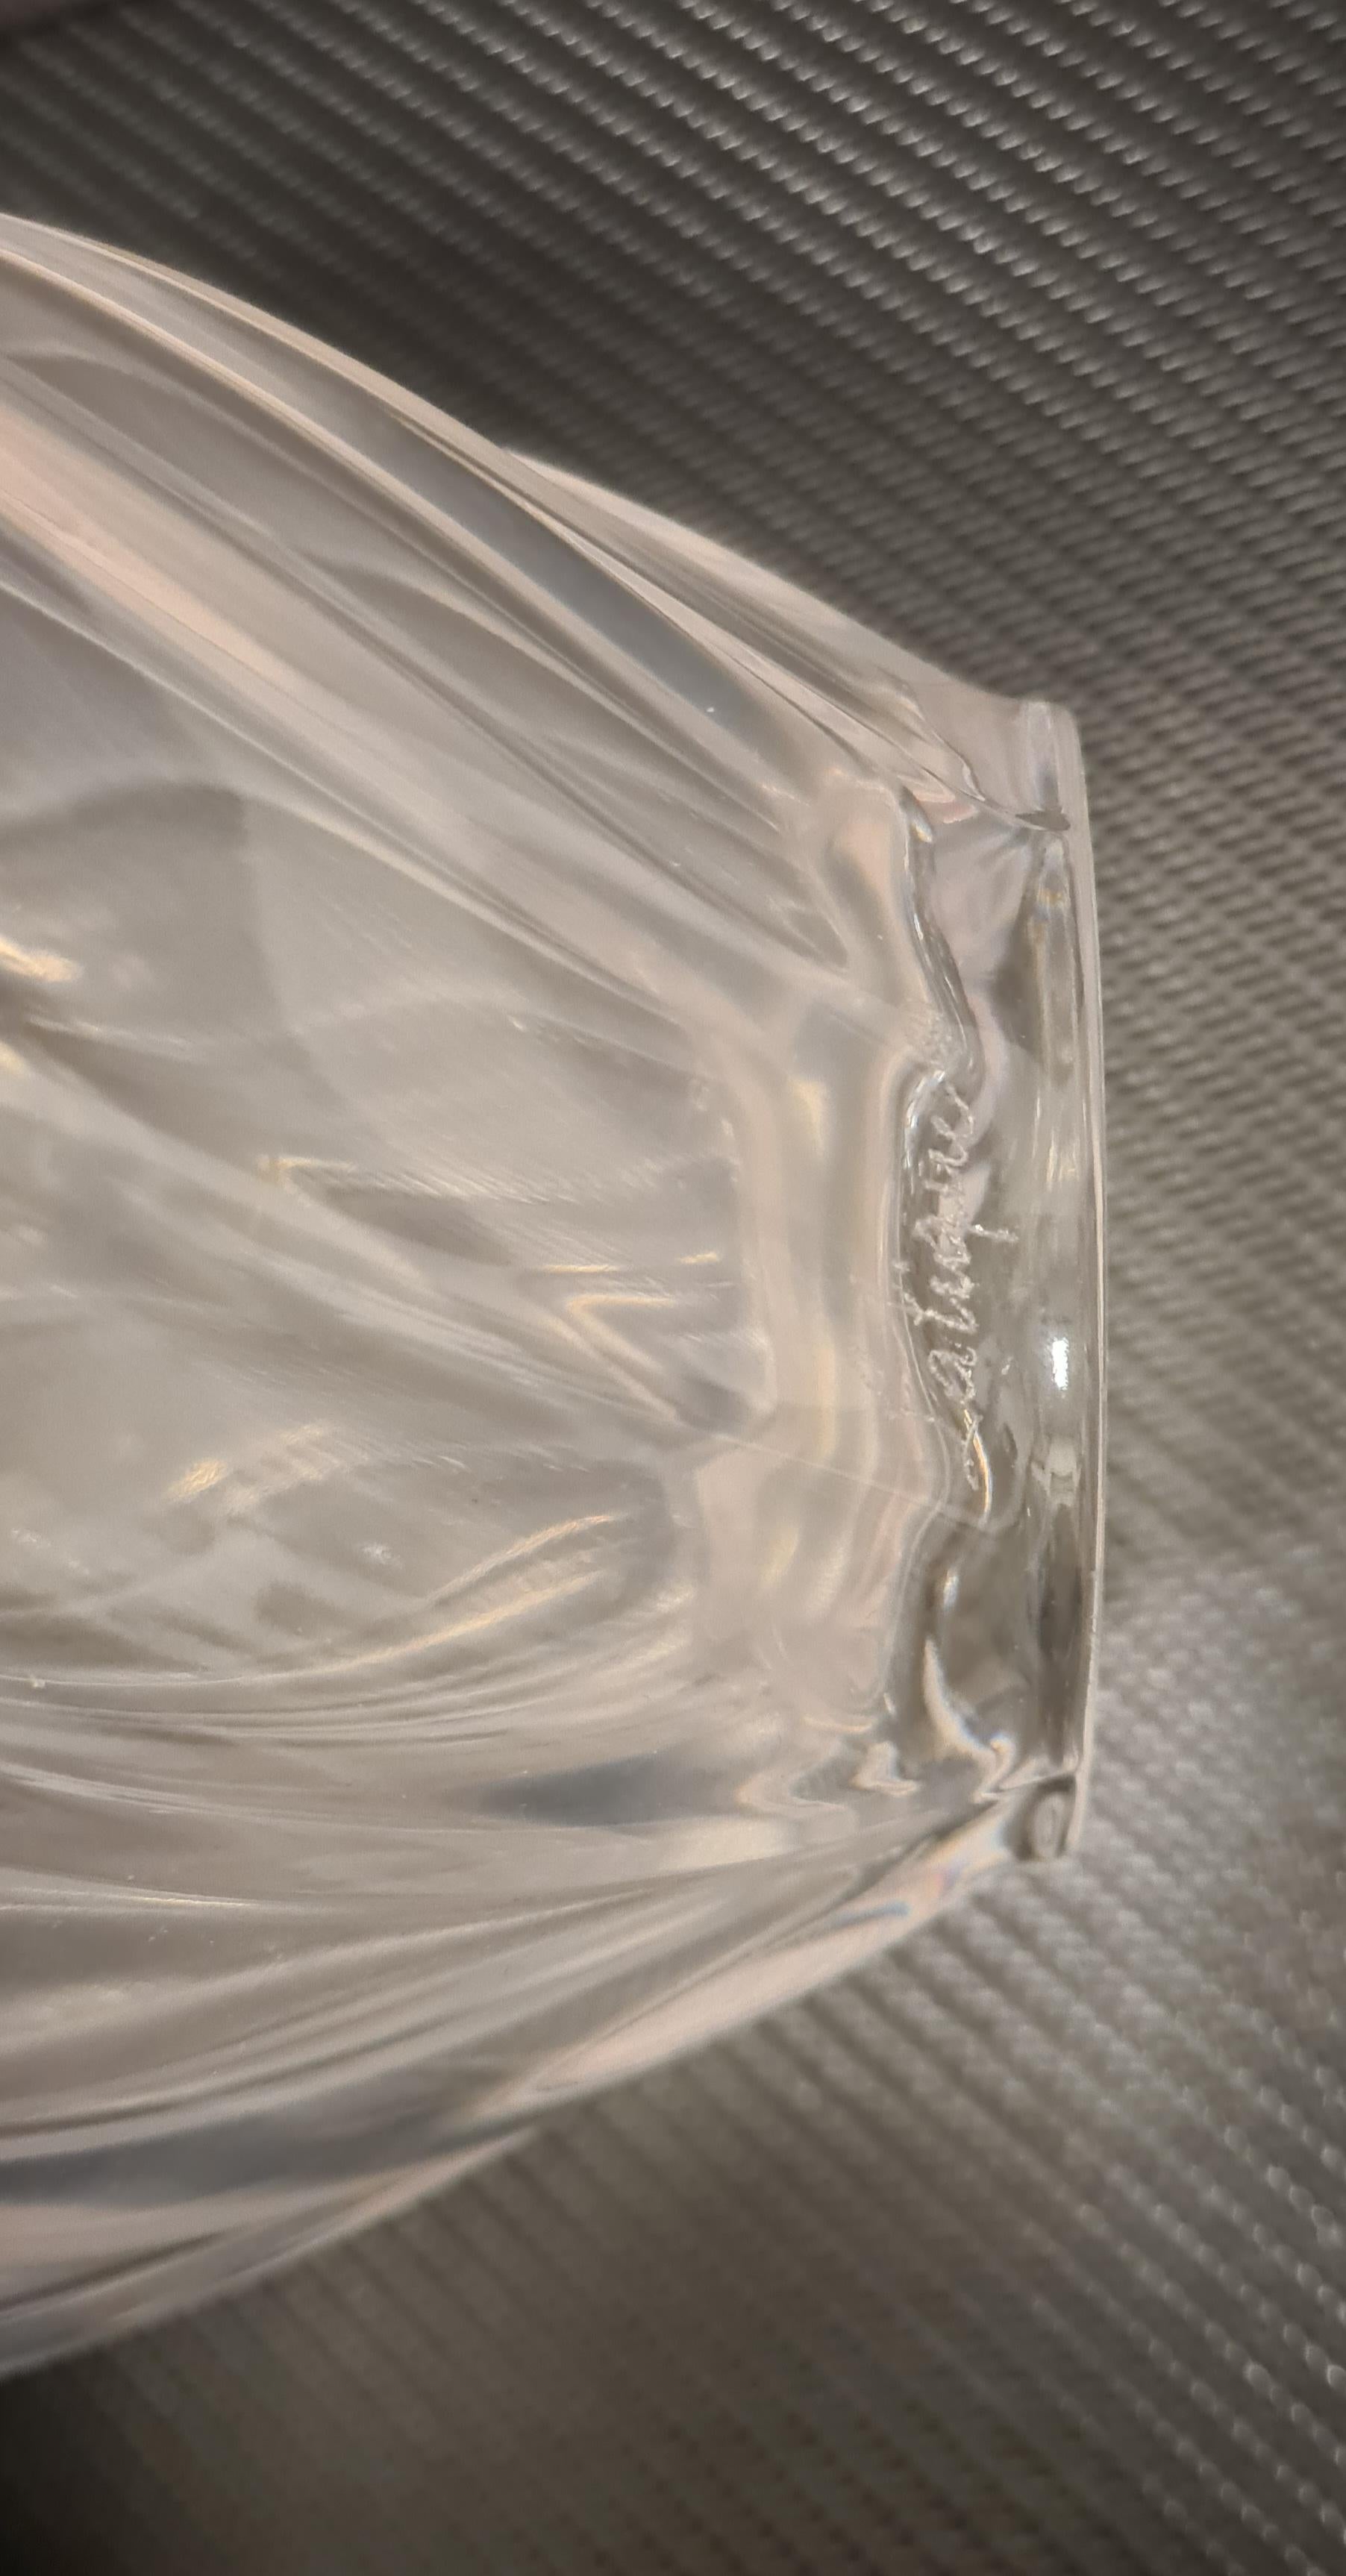 Large collectible Lalique glass bottle of the perfume L'air du temps For Sale 6